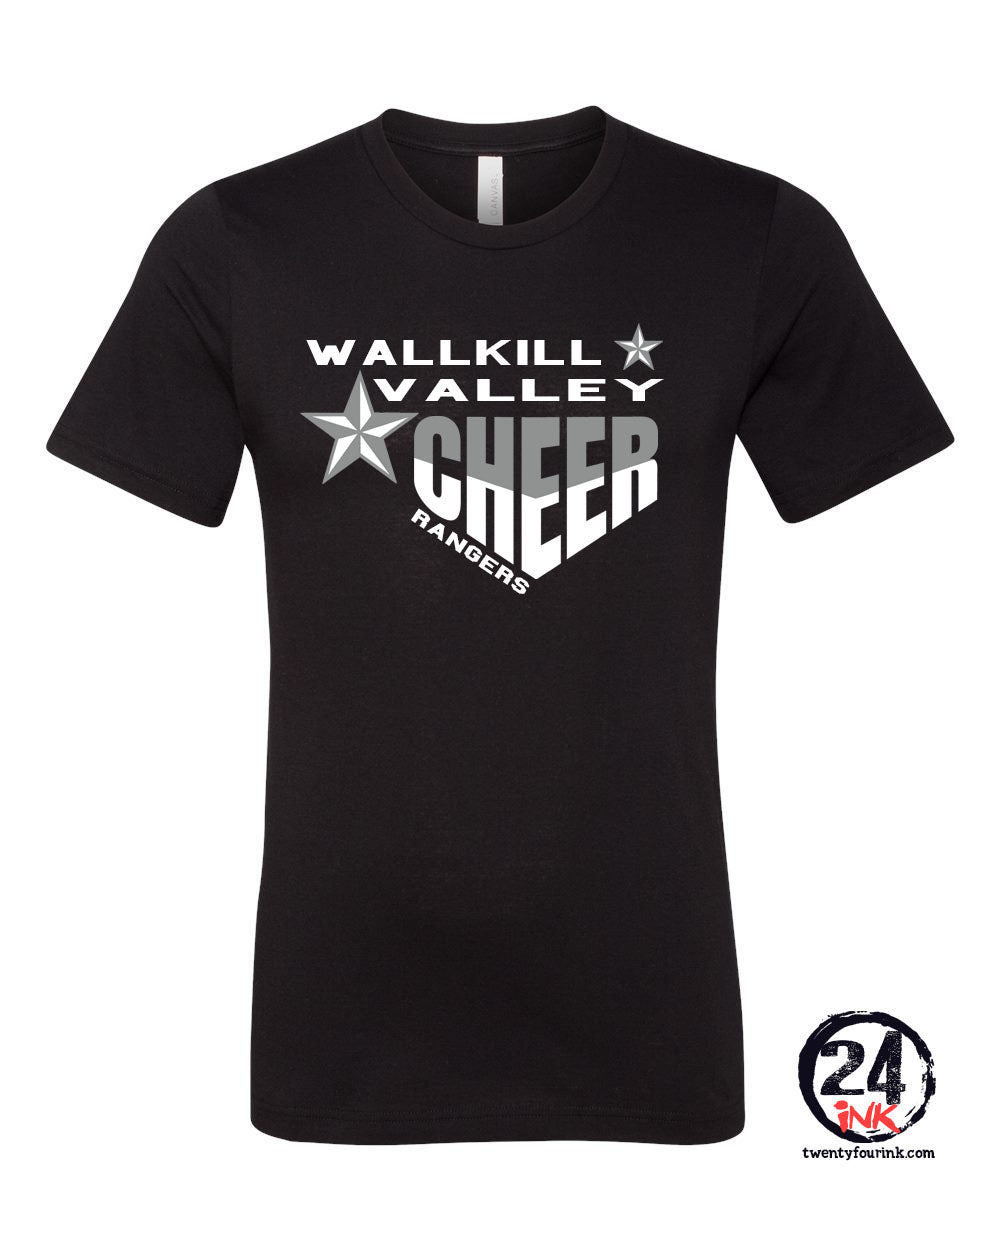 Wallkill Cheer design 5 T-Shirt